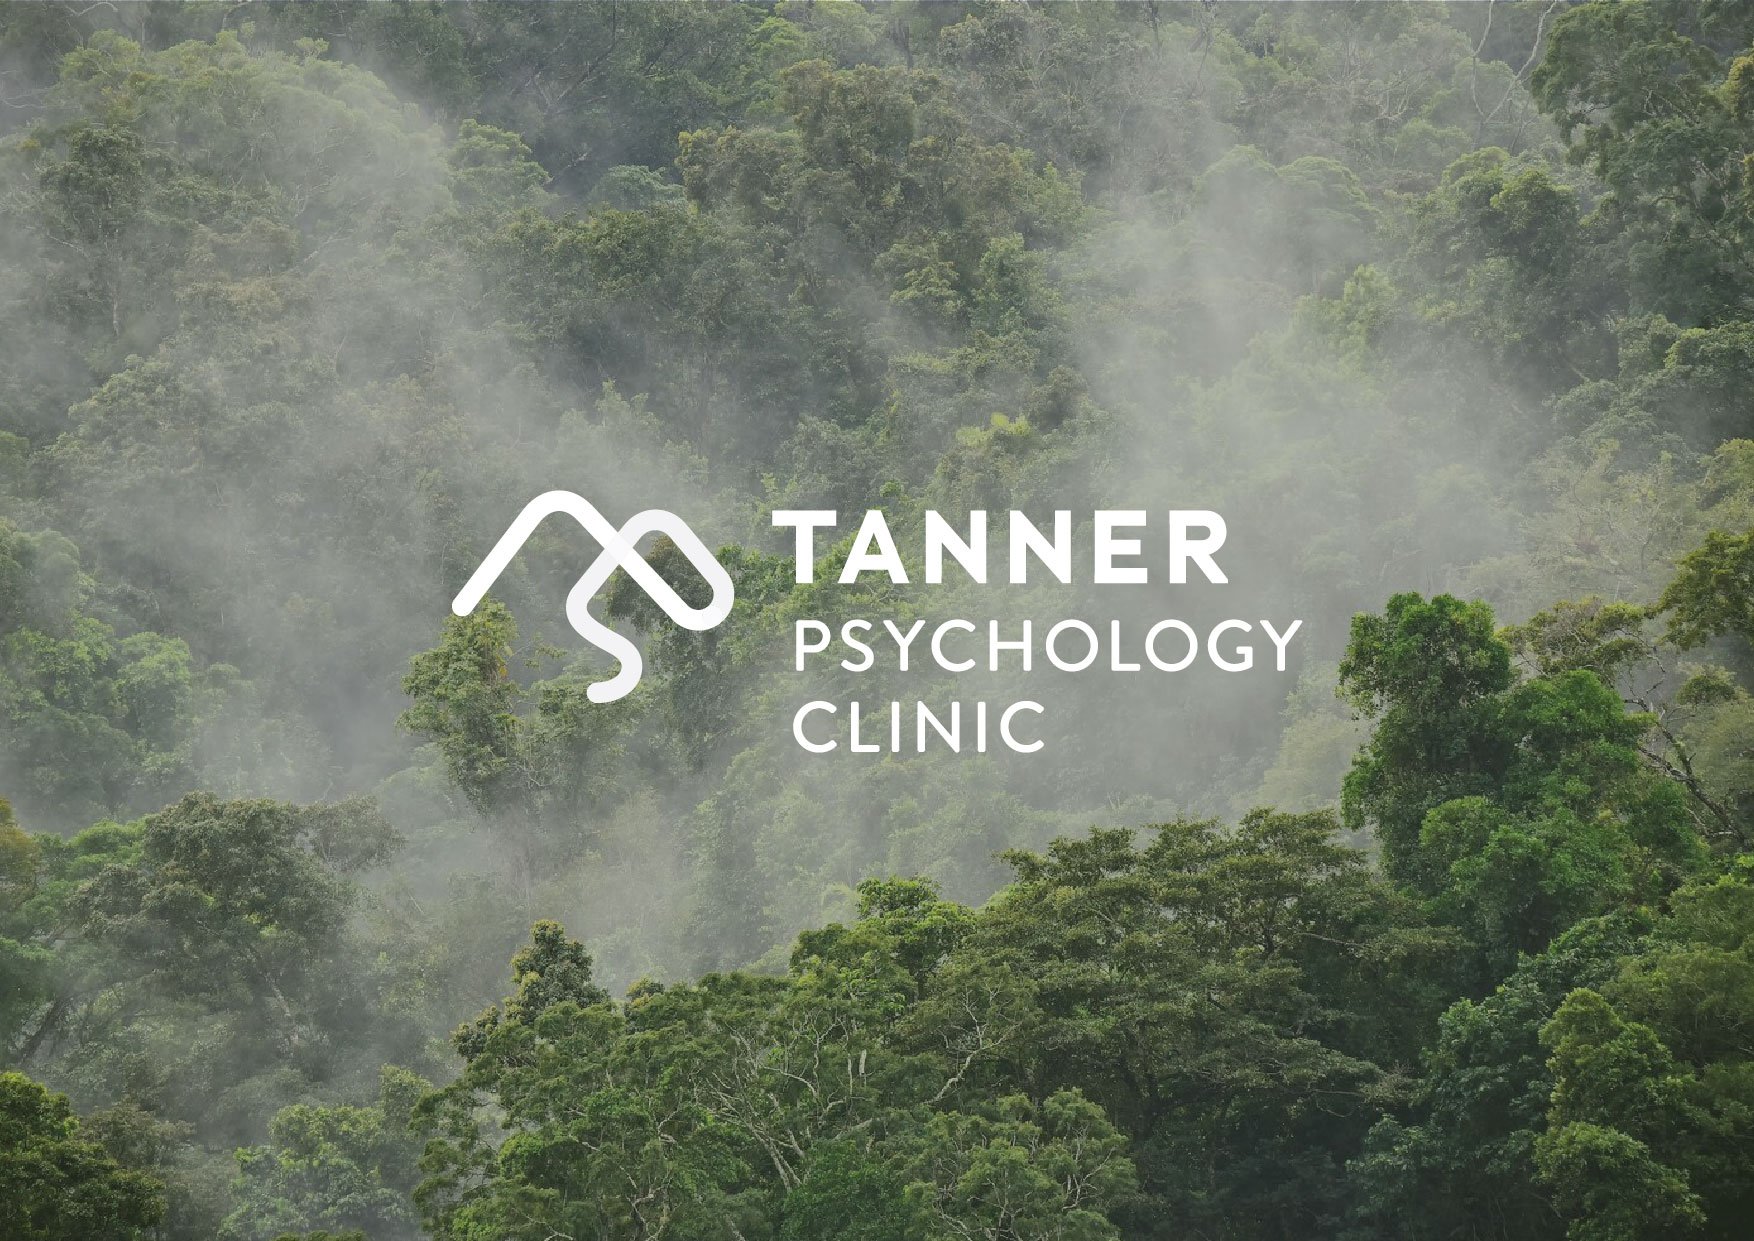 Tanner Psychology Clinic  - Forest Background Logo-01.jpg